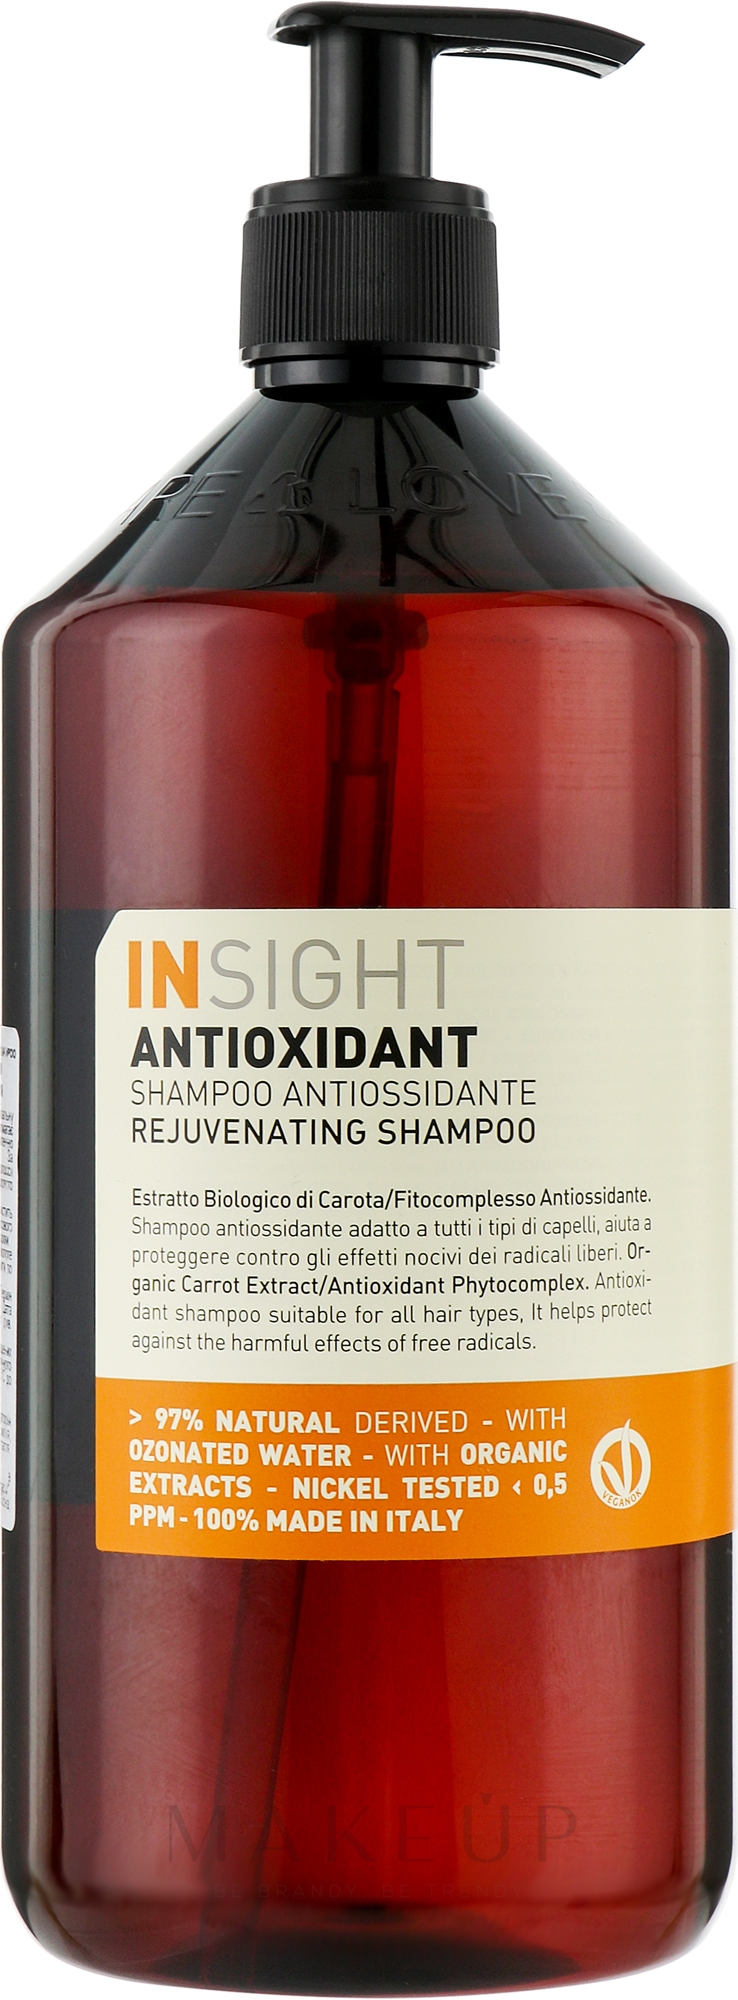 Haartonisierendes Shampoo - Insight Antioxidant Rejuvenating Shampoo — Foto 900 ml